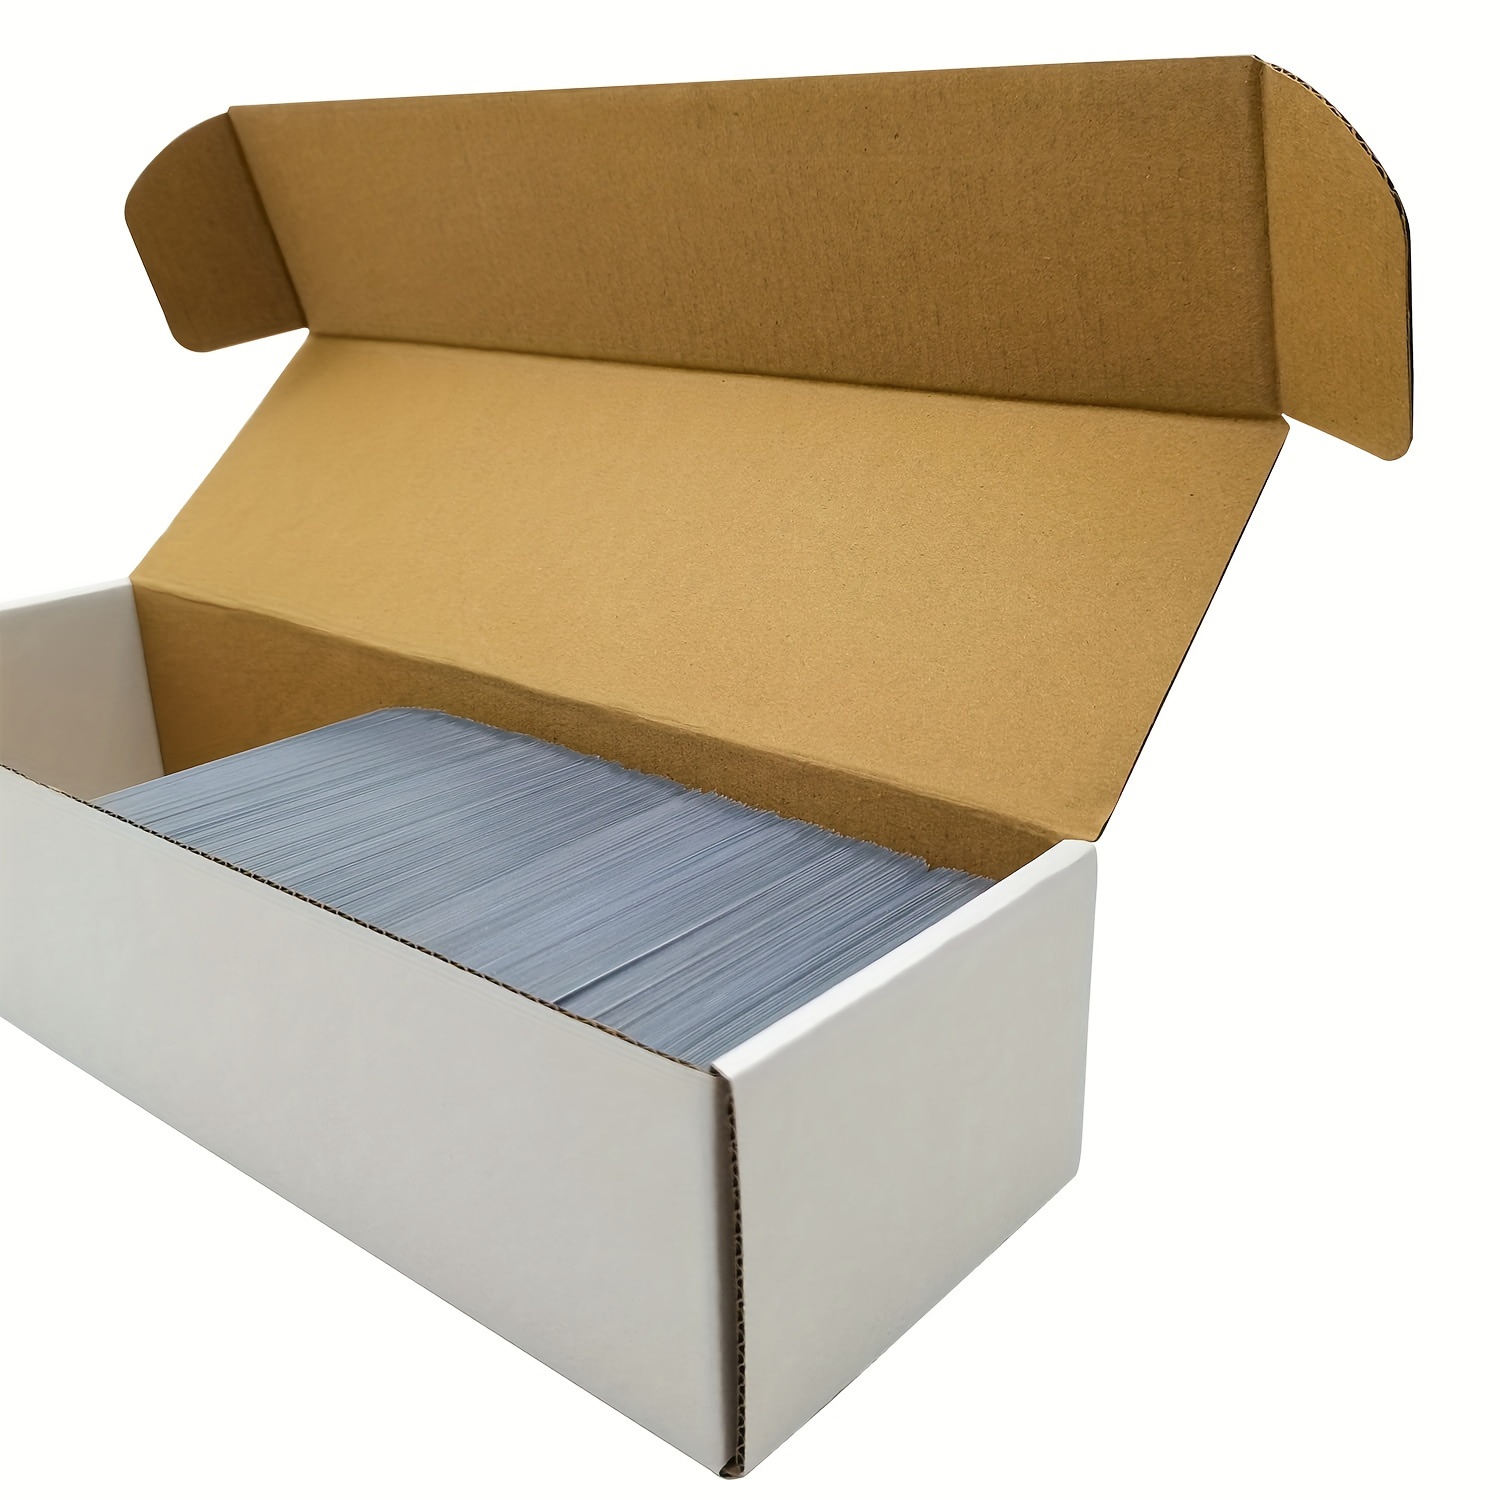 BCW Storage Box 800 Count - Corrugated Cardboard